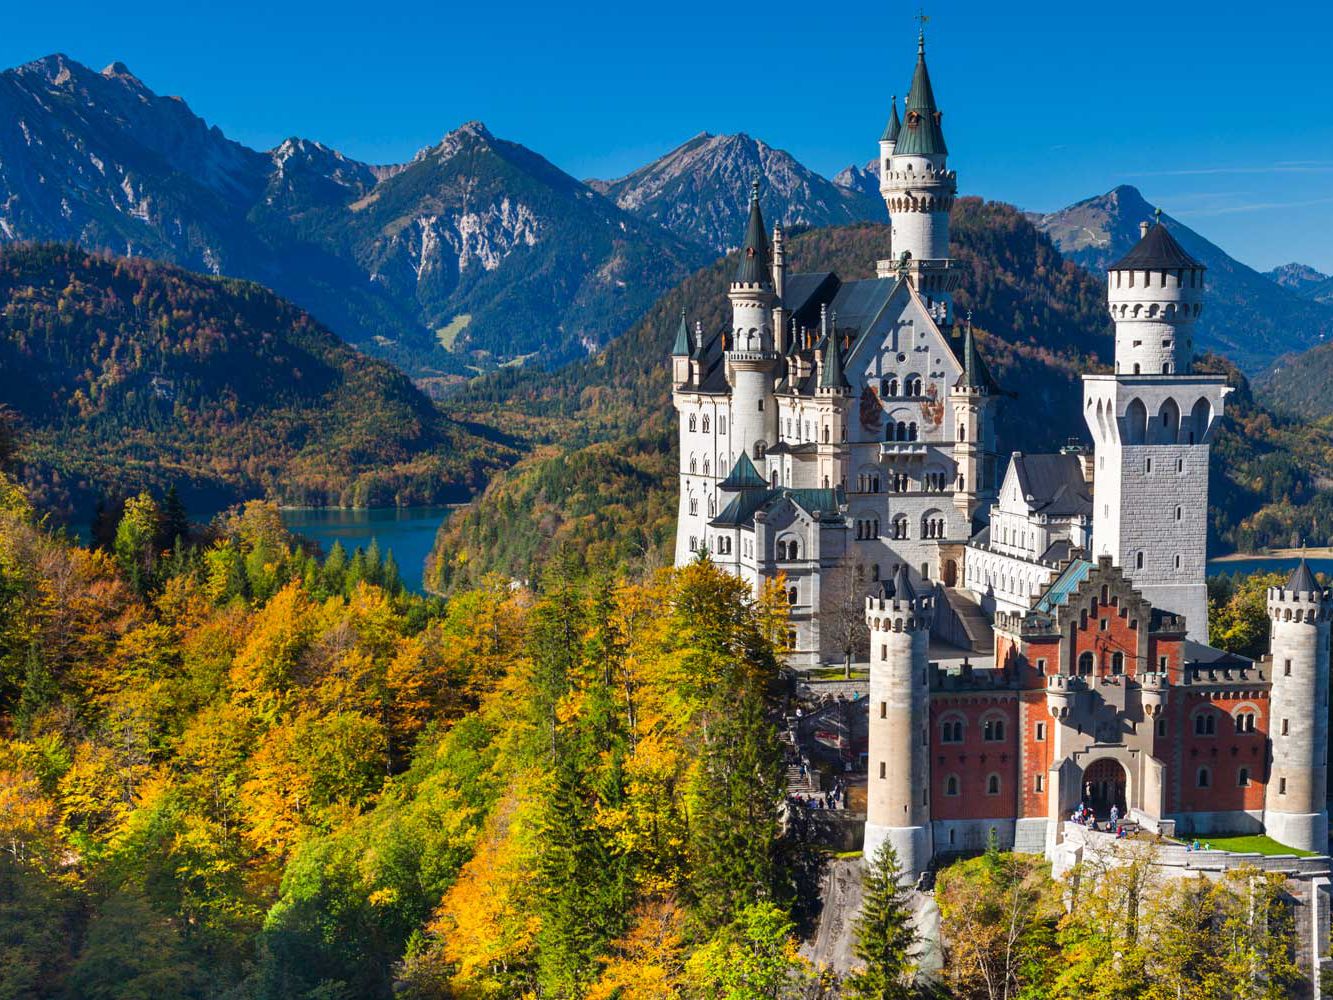 Neuschwanstein Castle - Discover The Fairytale Castle Of King Ludwig II